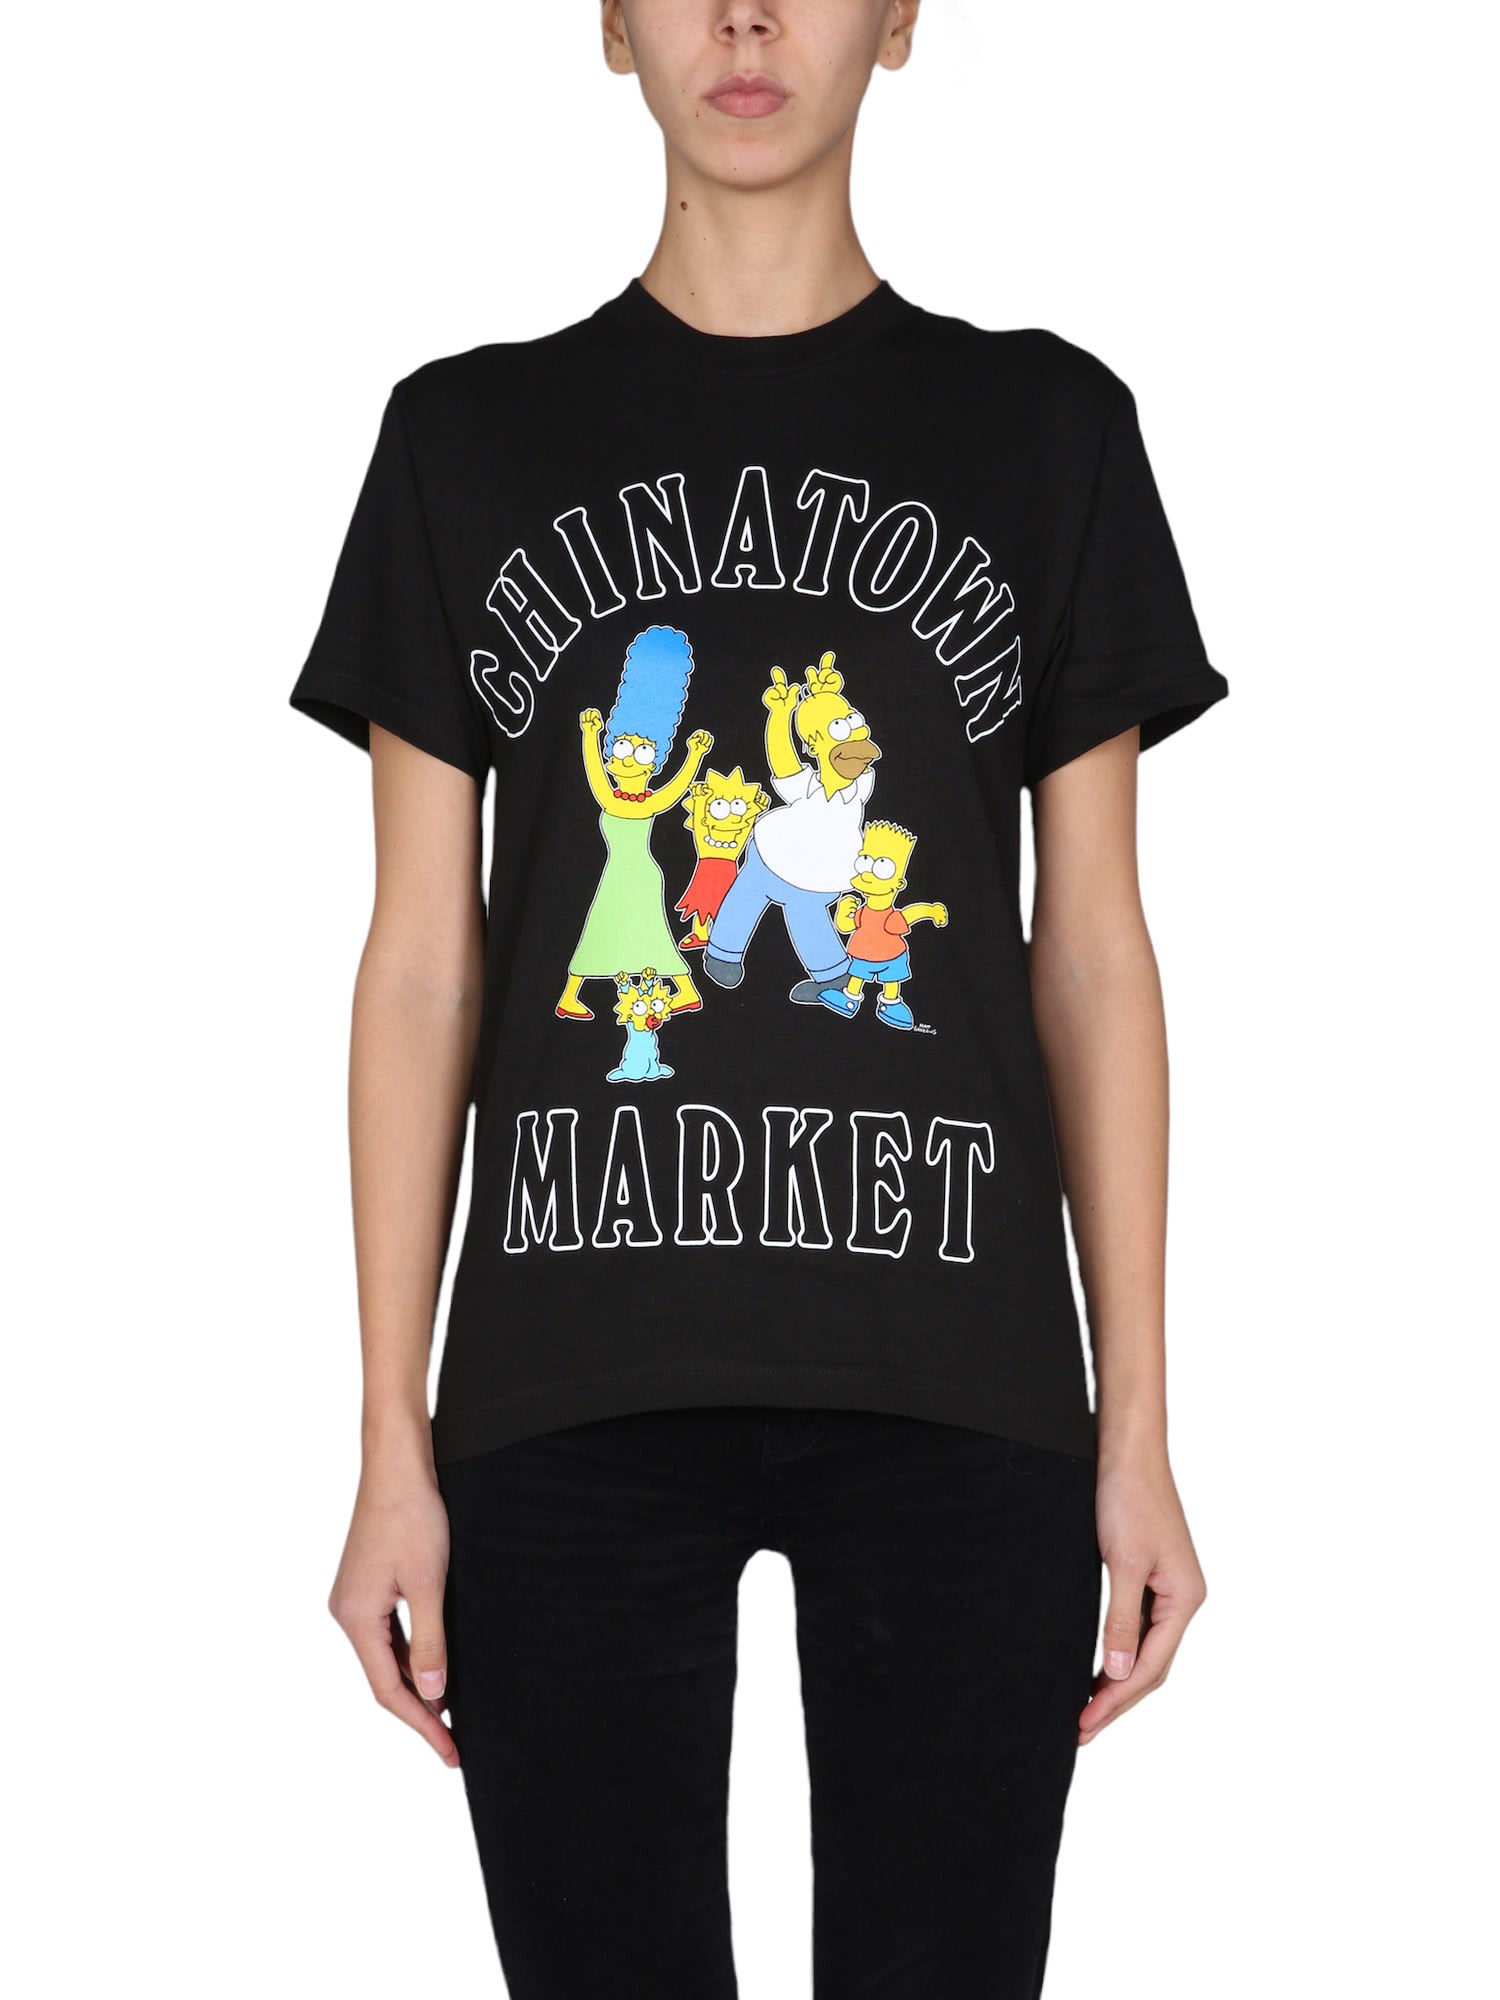 Market Simpson Family T-shirt